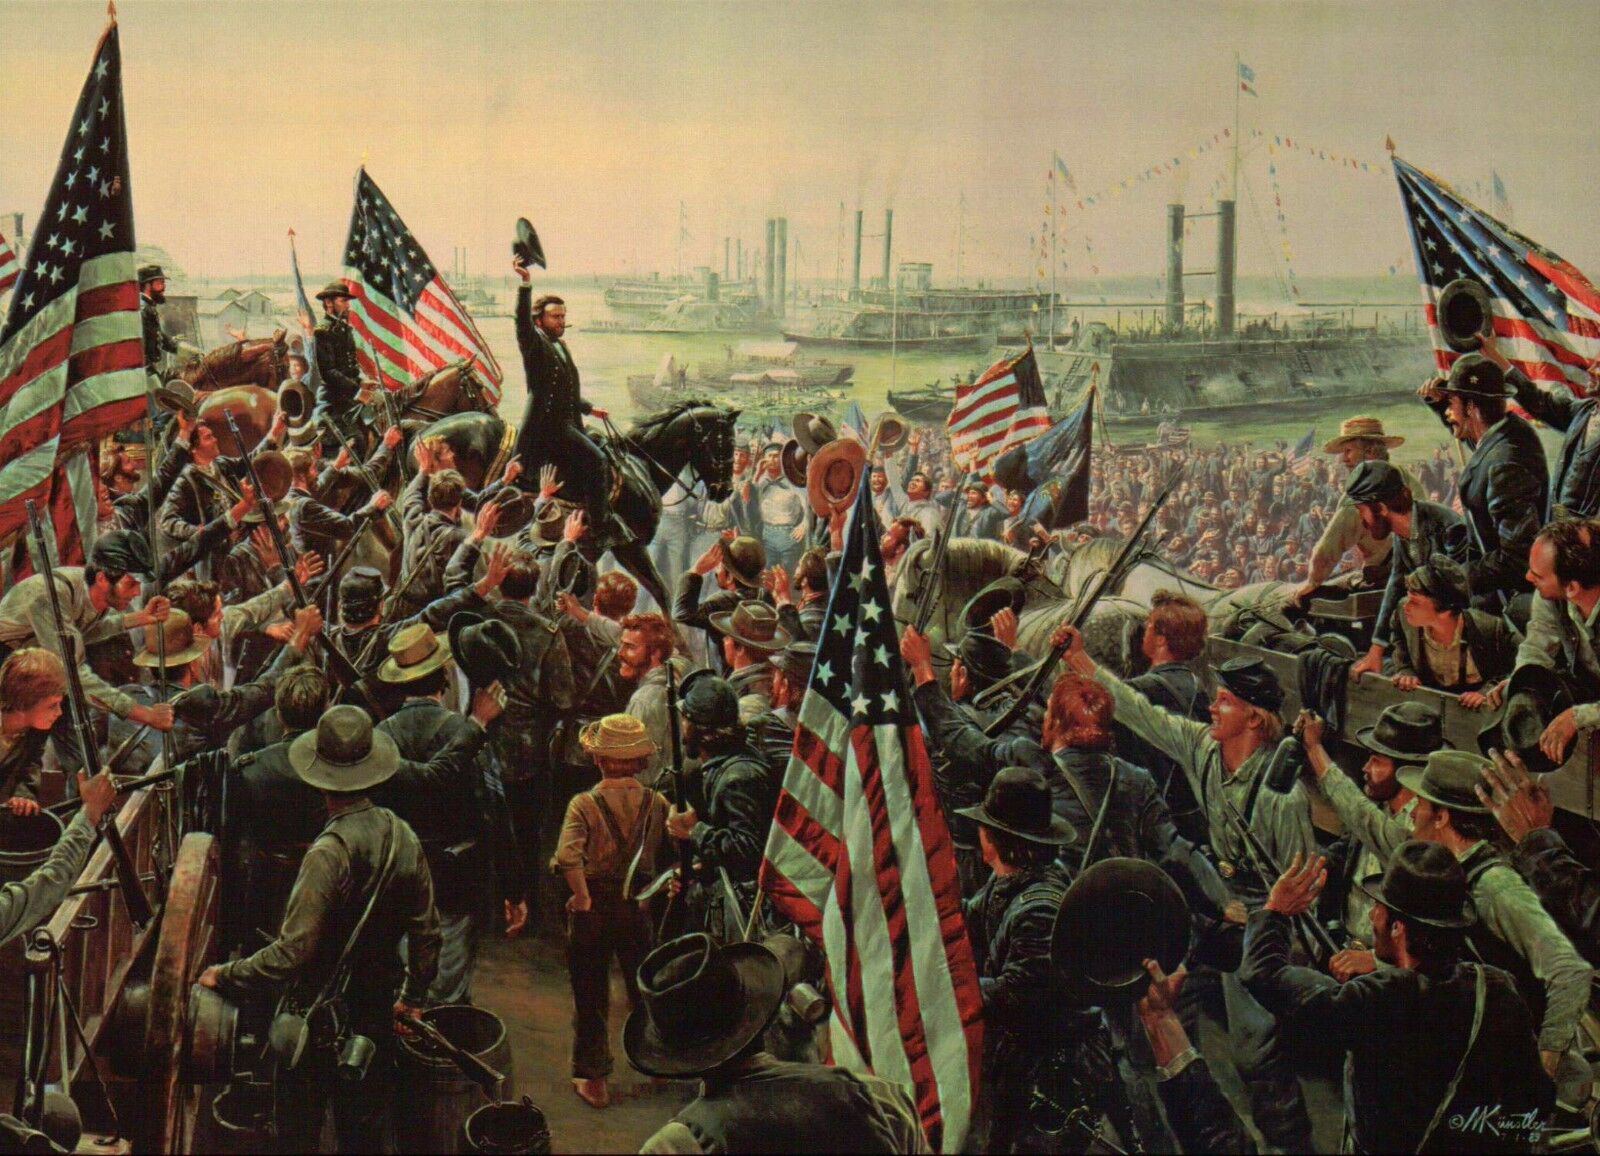 General Ulysses S. Grant at Vicksburg, July 4 1863 - Military Civil War Postcard